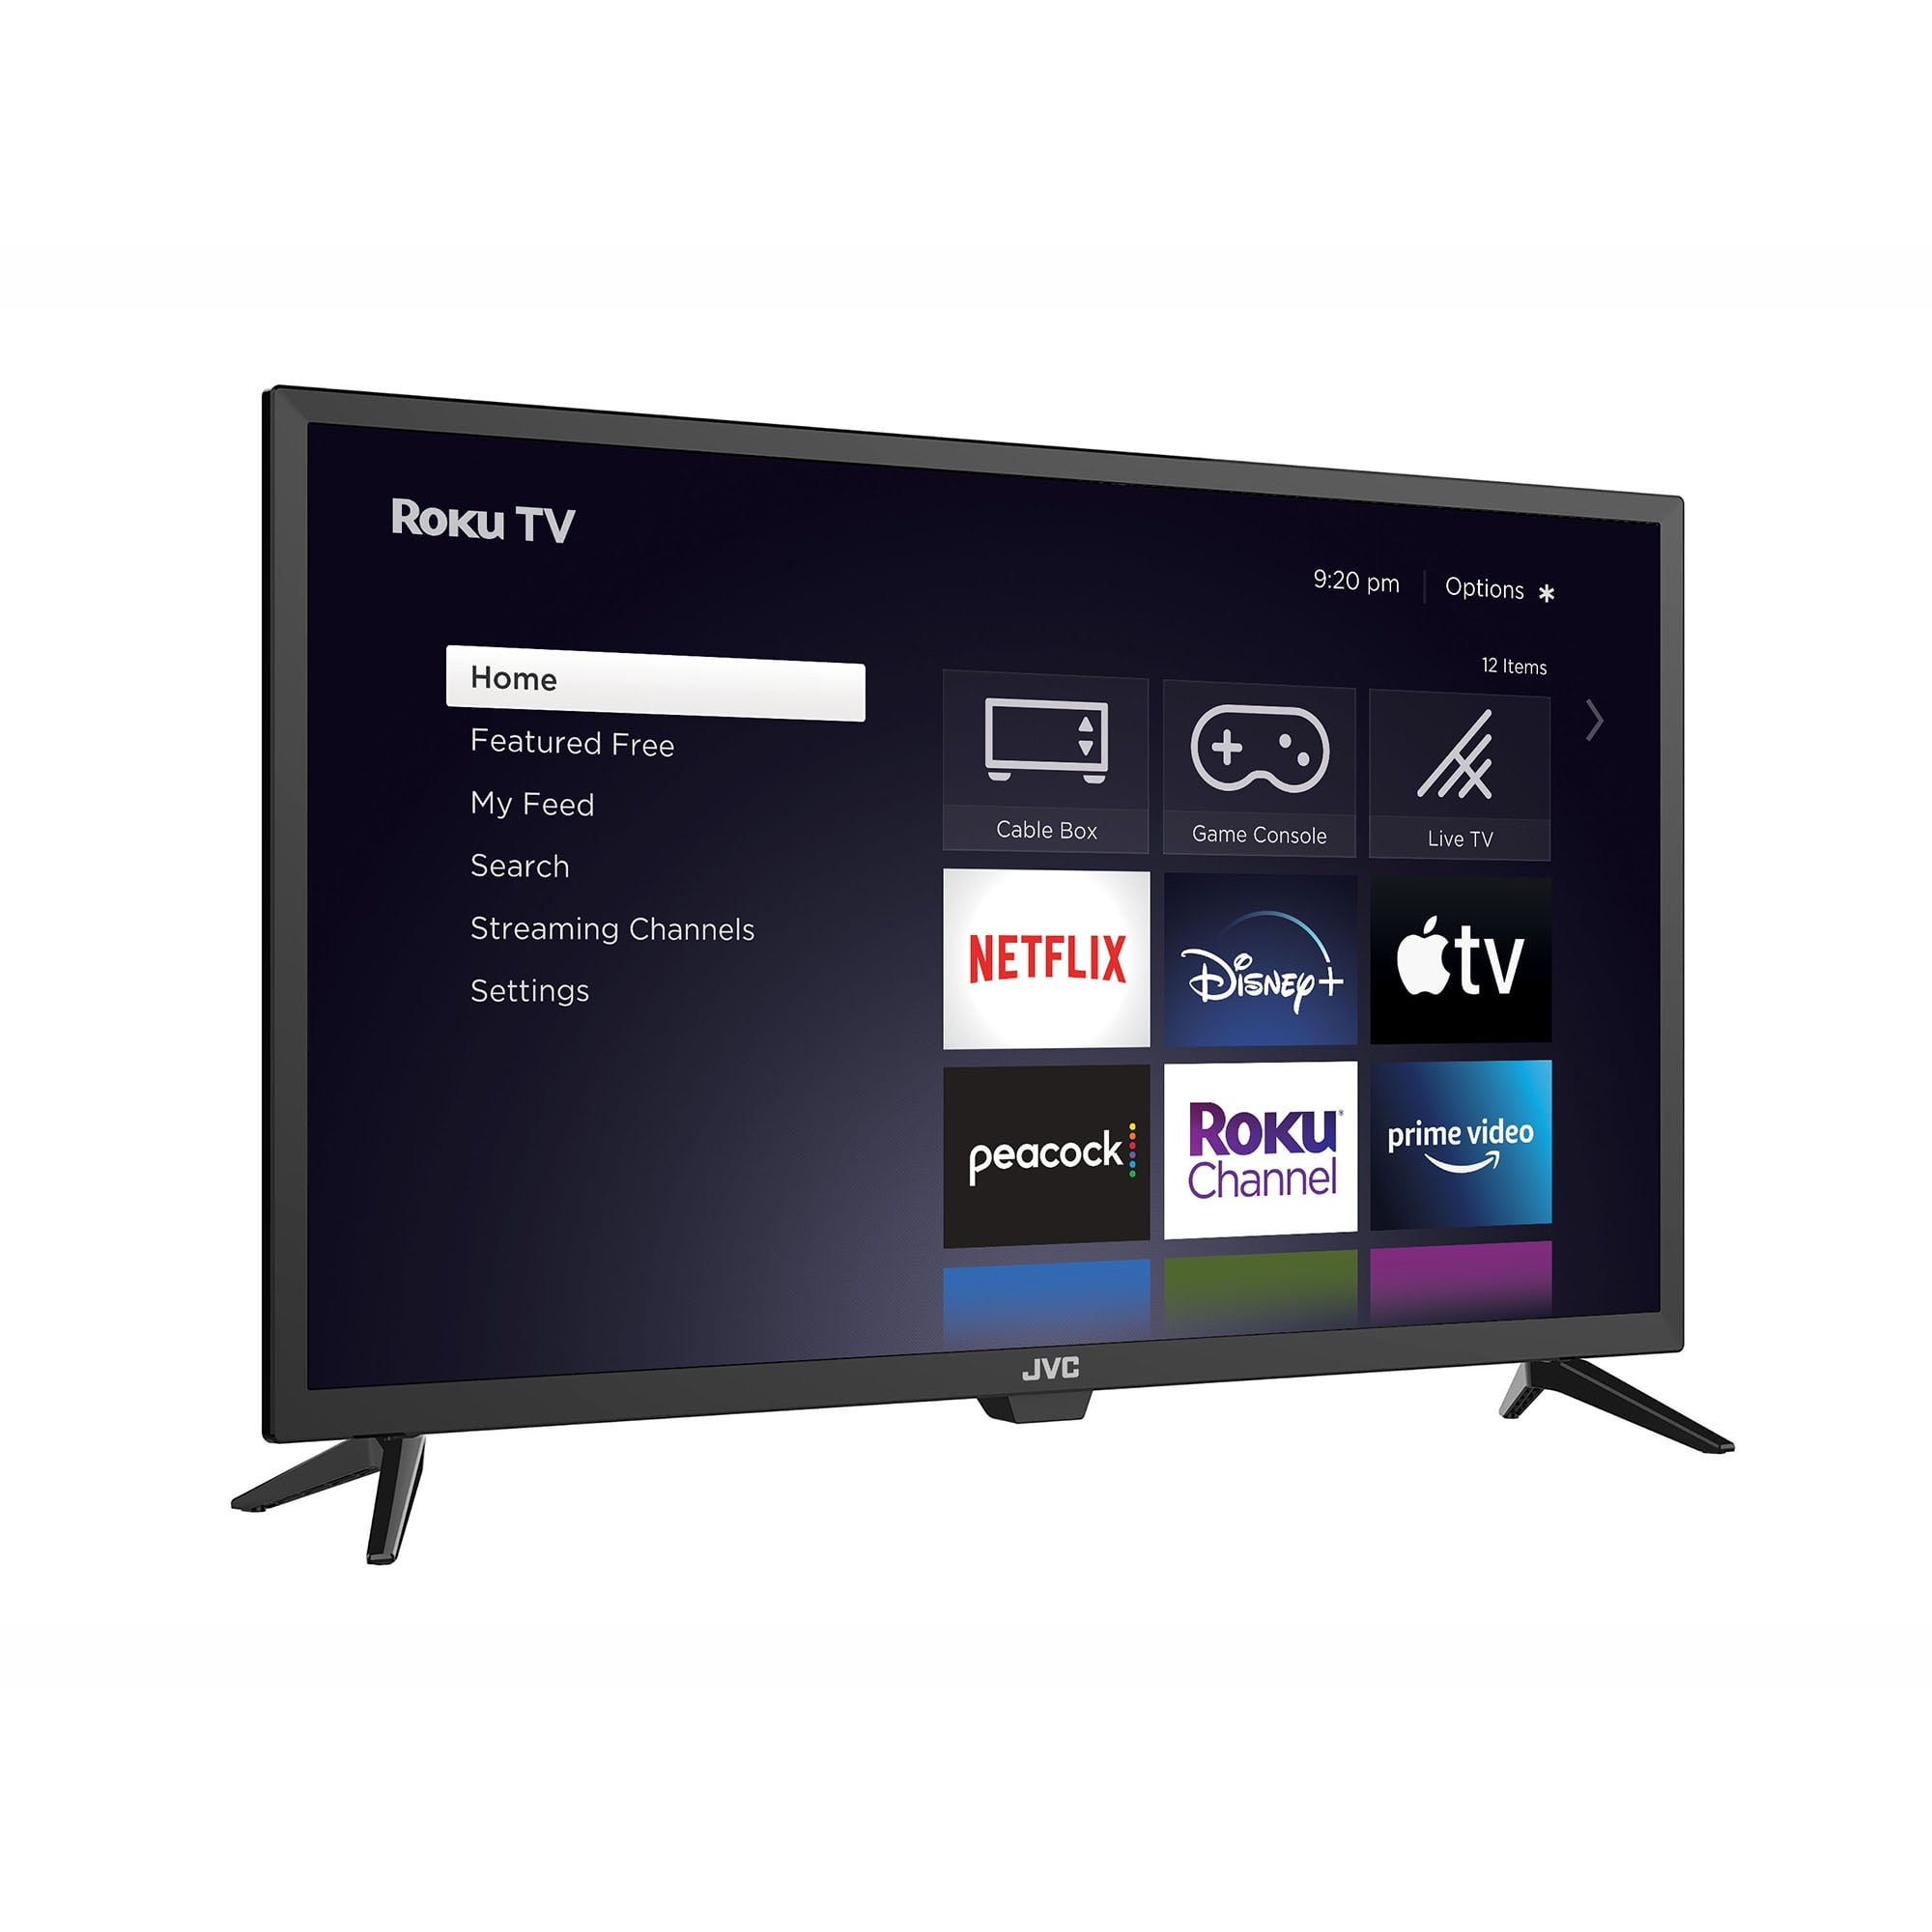 JVC 32" (720P) Roku Smart LED TV LT-32MAW205 - Walmart.com